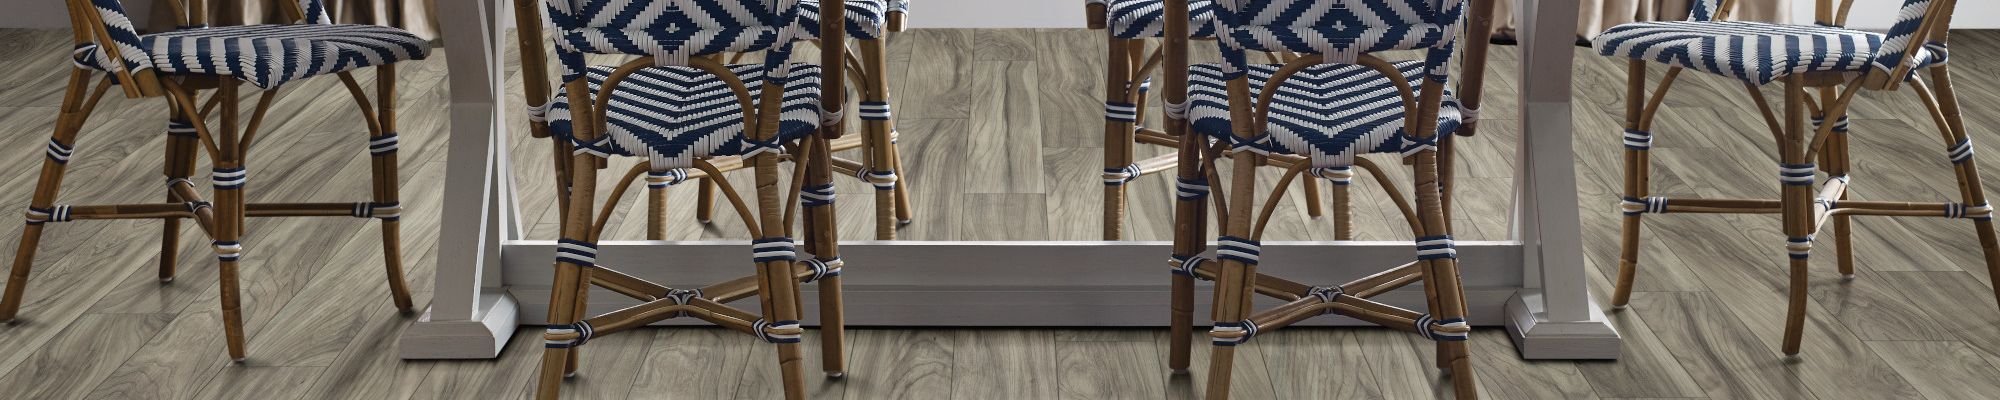 Dining room with Repel Laminate flooring - Wood-look laminate flooring from Carpet Studio & Design Inc. in Los Angeles